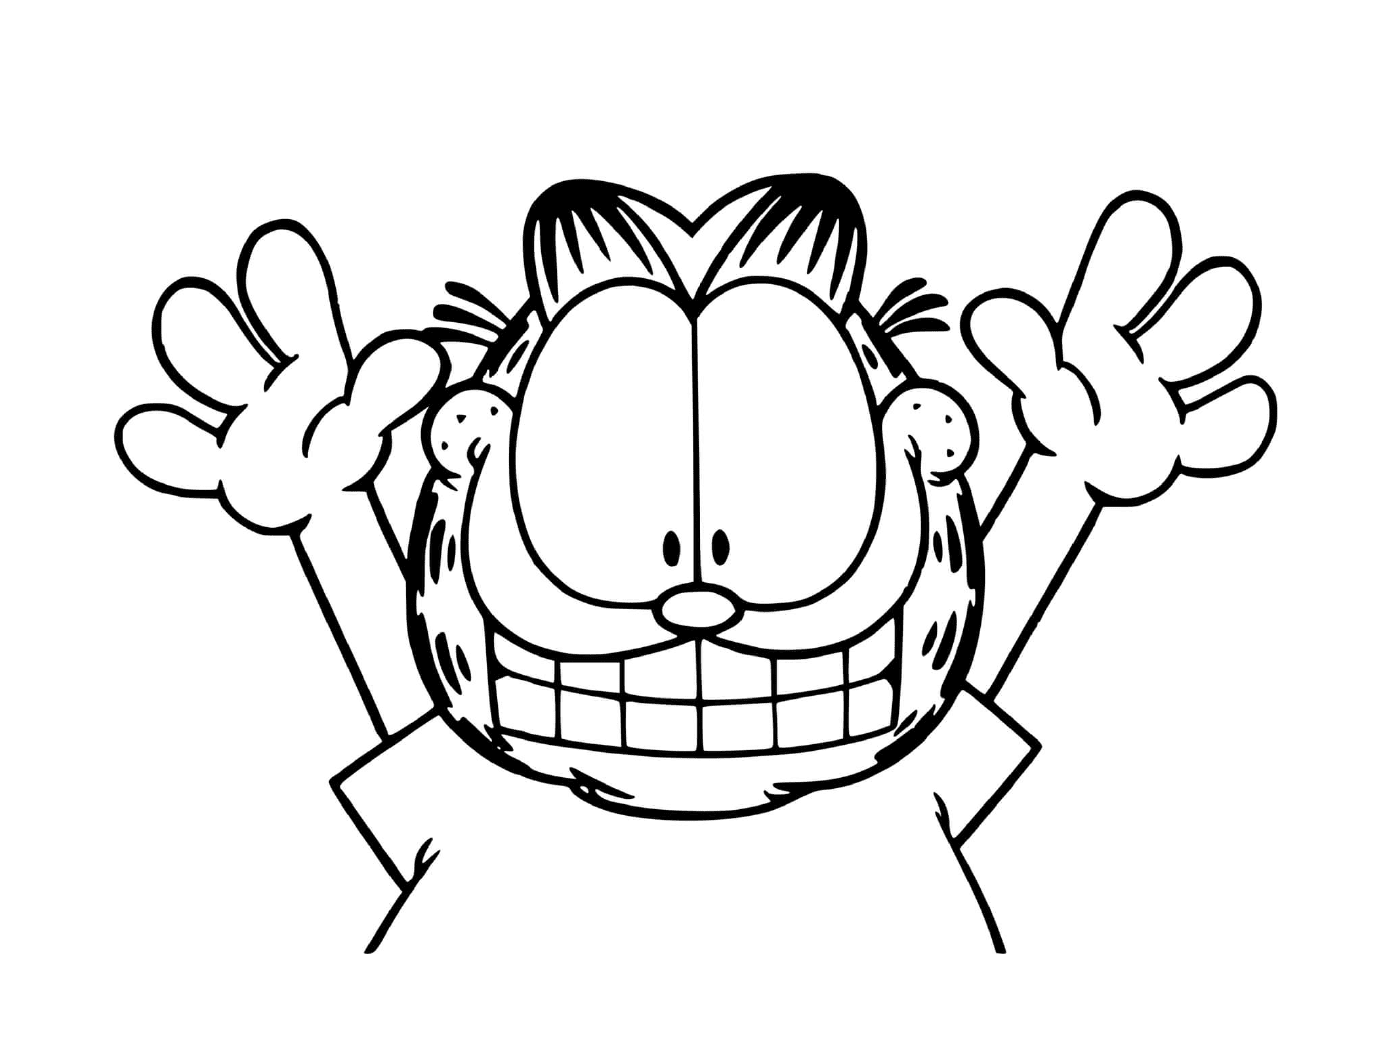  Garfield's all happy 